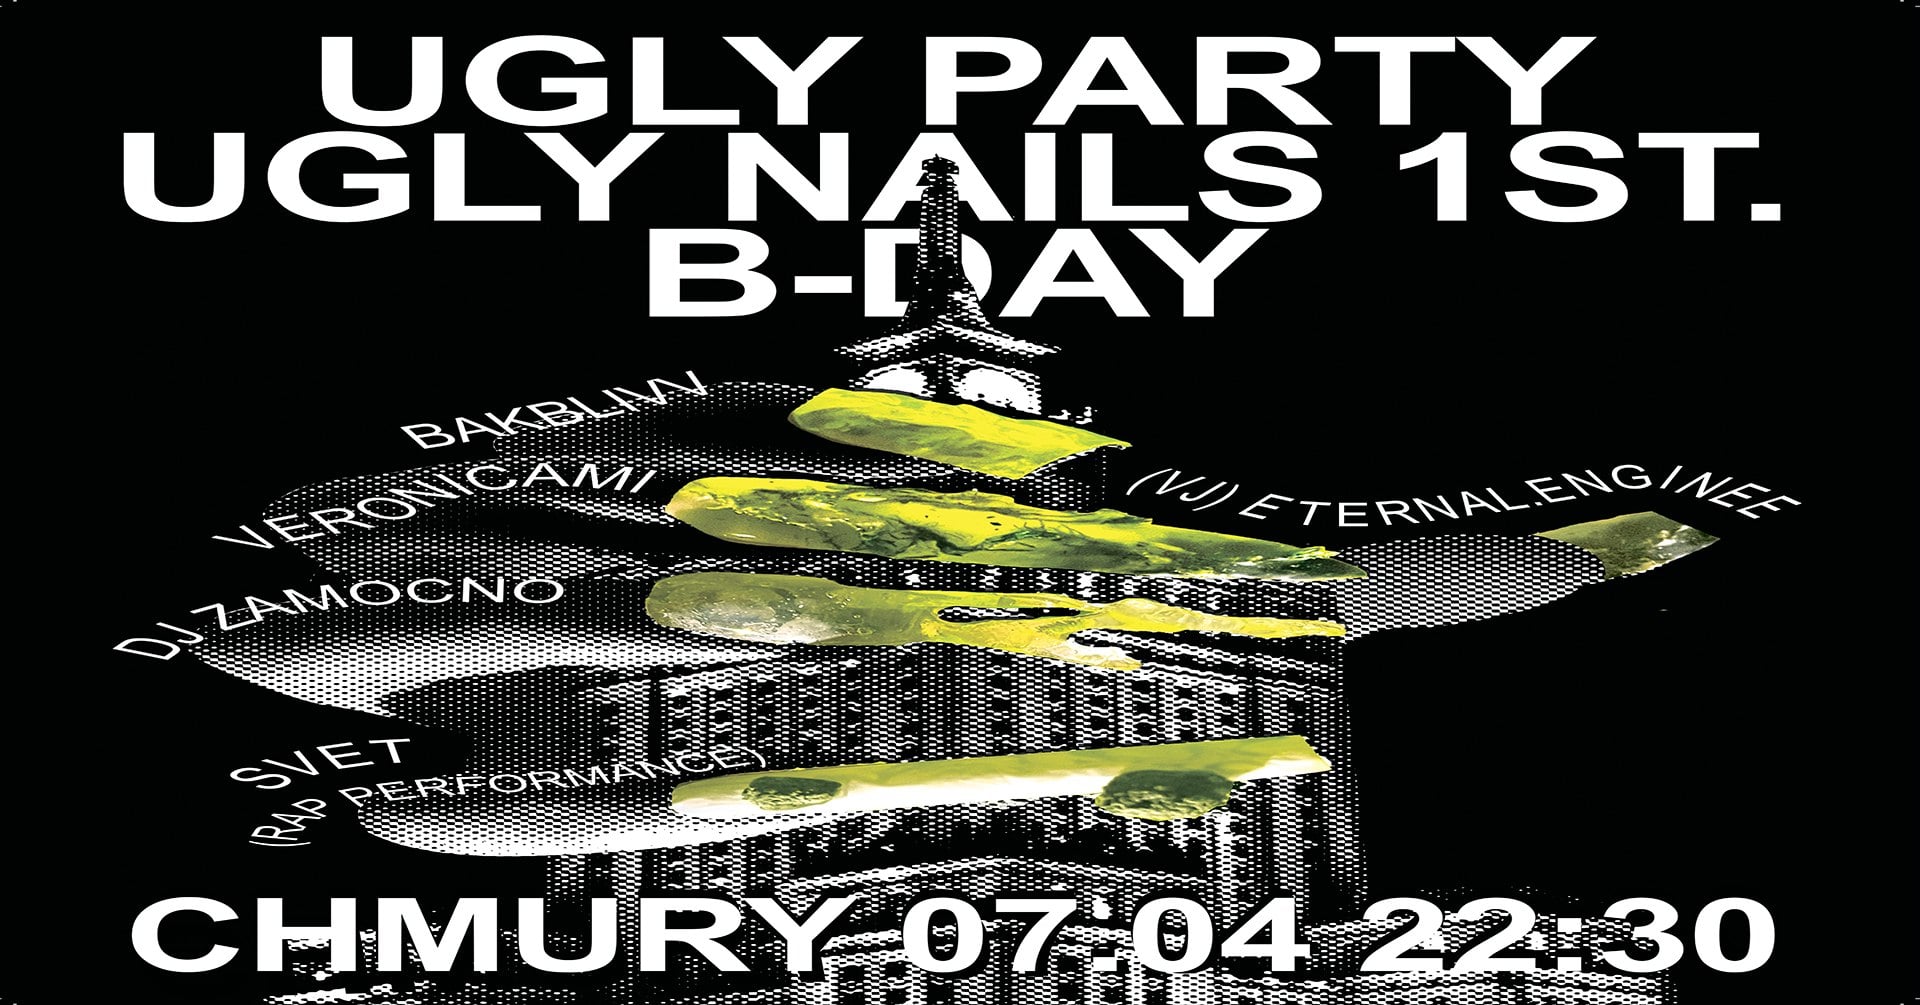 UGLY PARTY / Chmury / 1. urodziny Ugly Nails